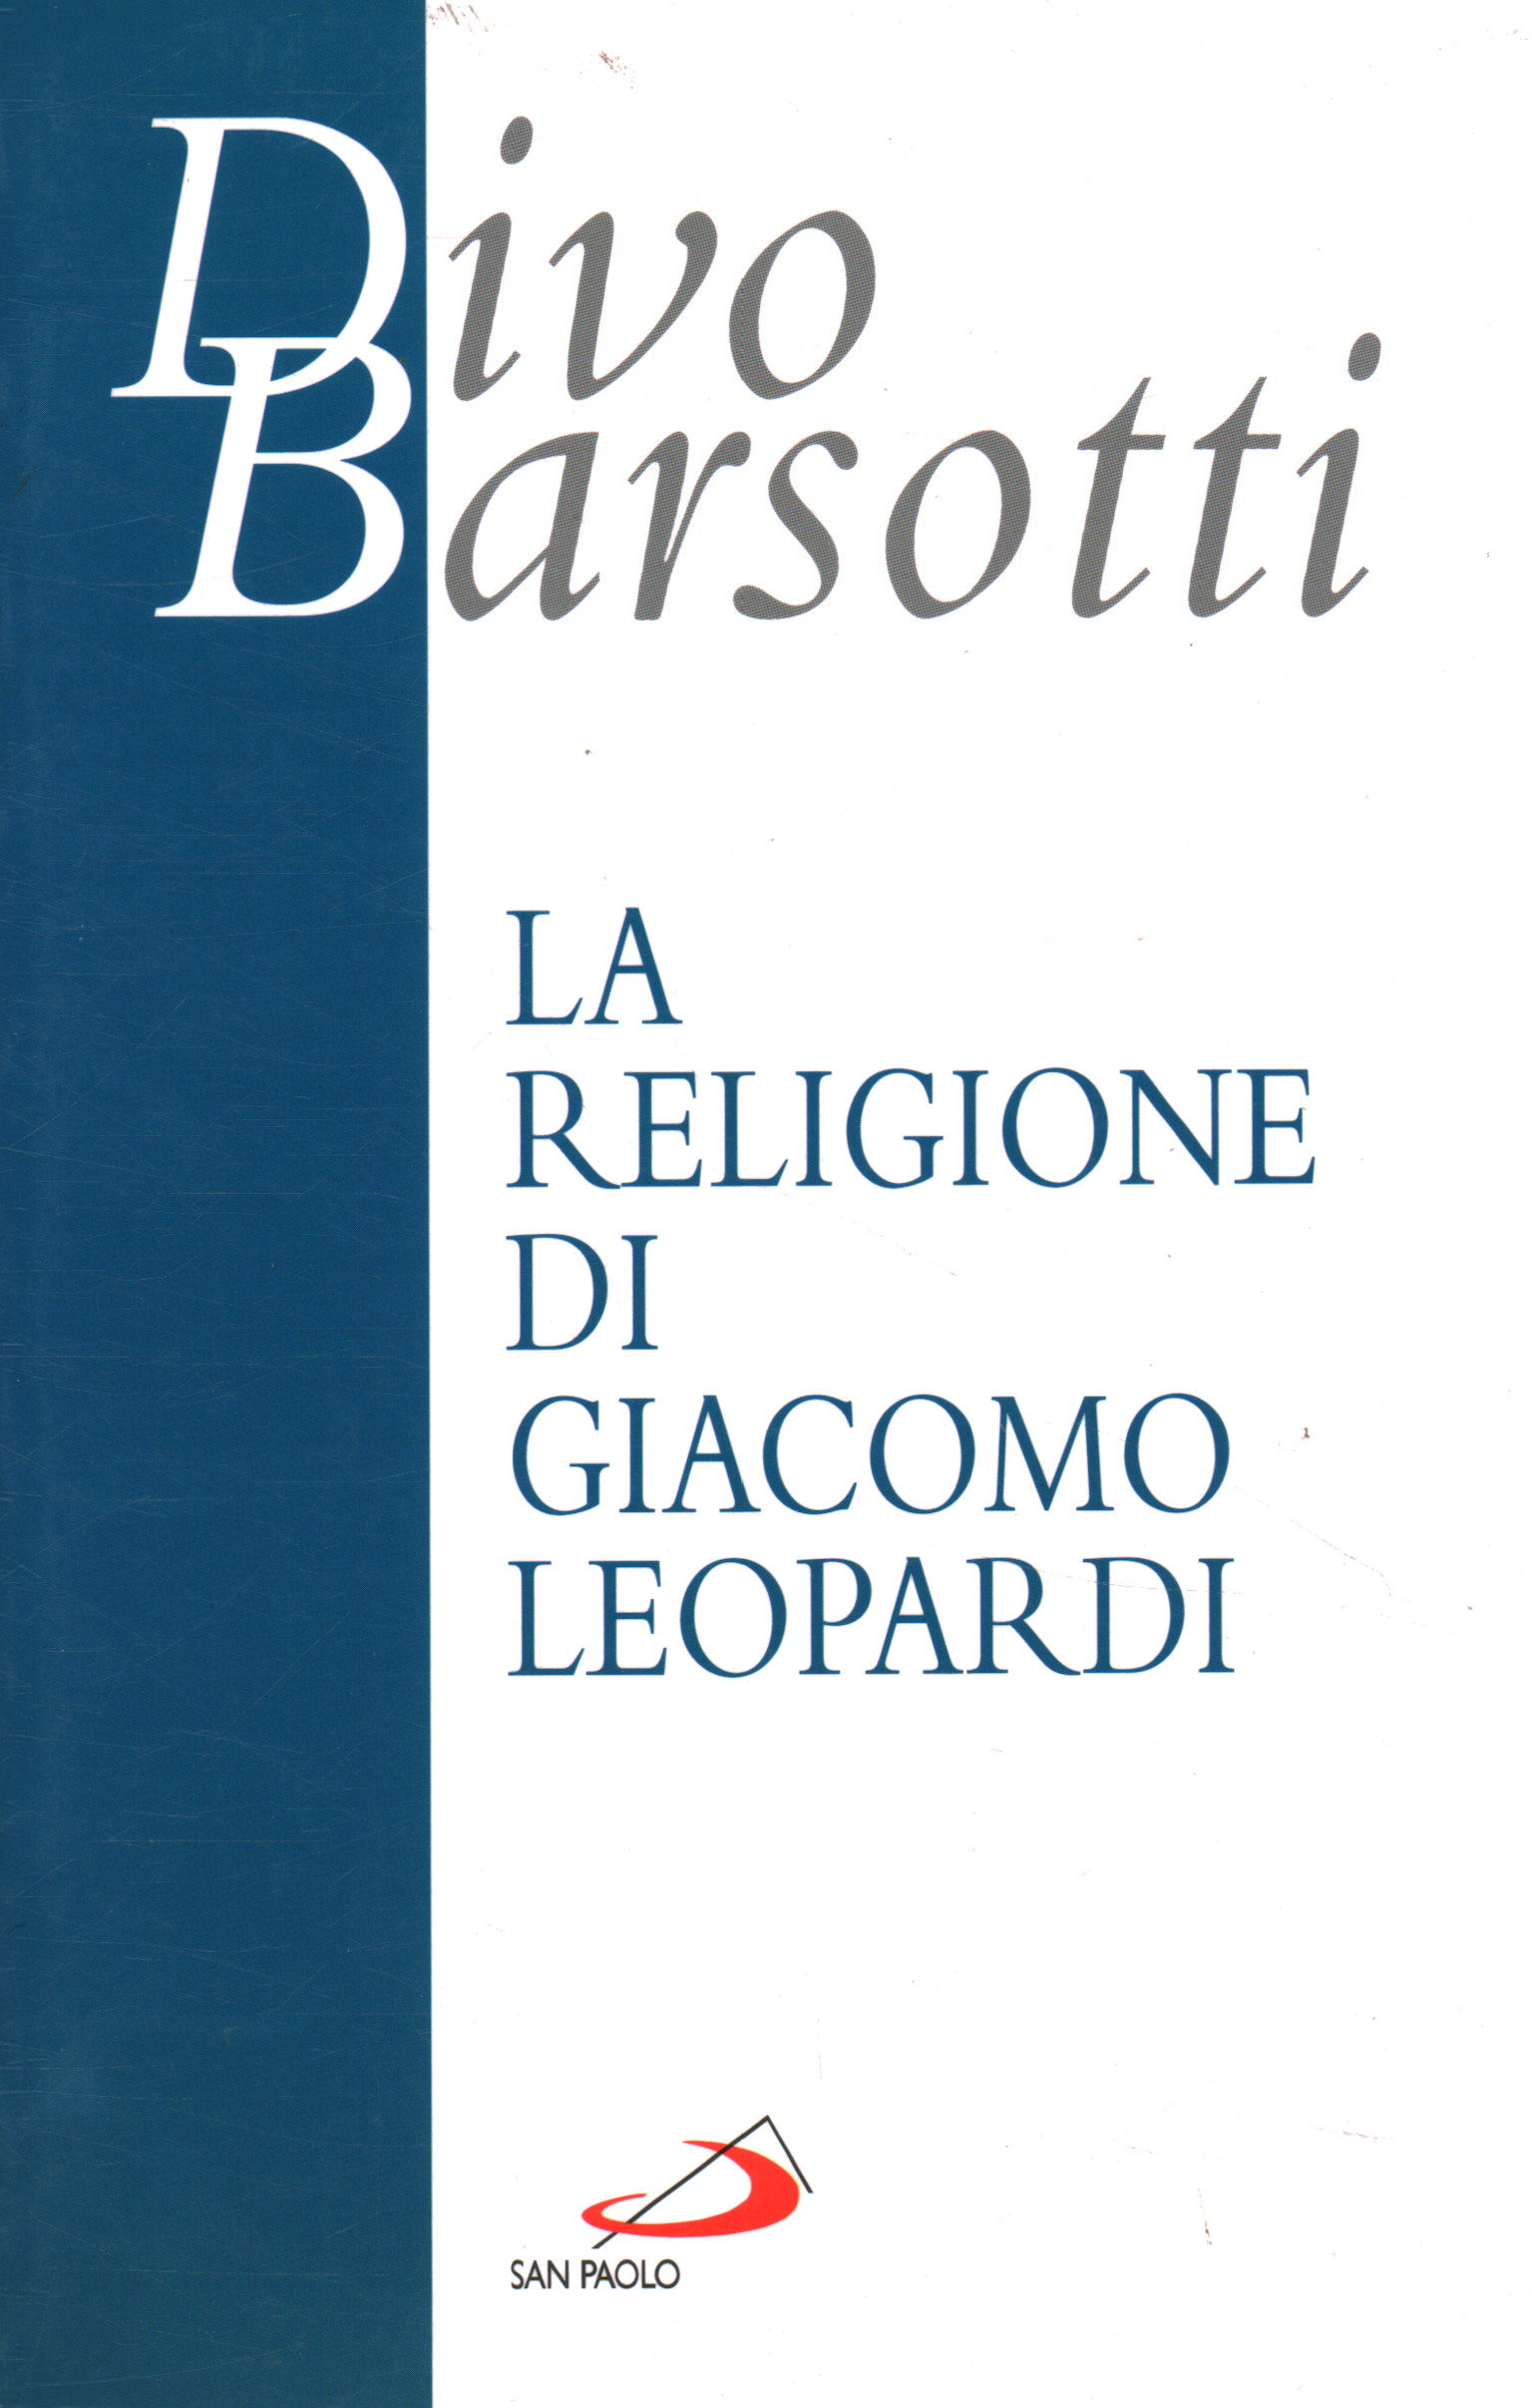 Die Religion von Giacomo Leopardi